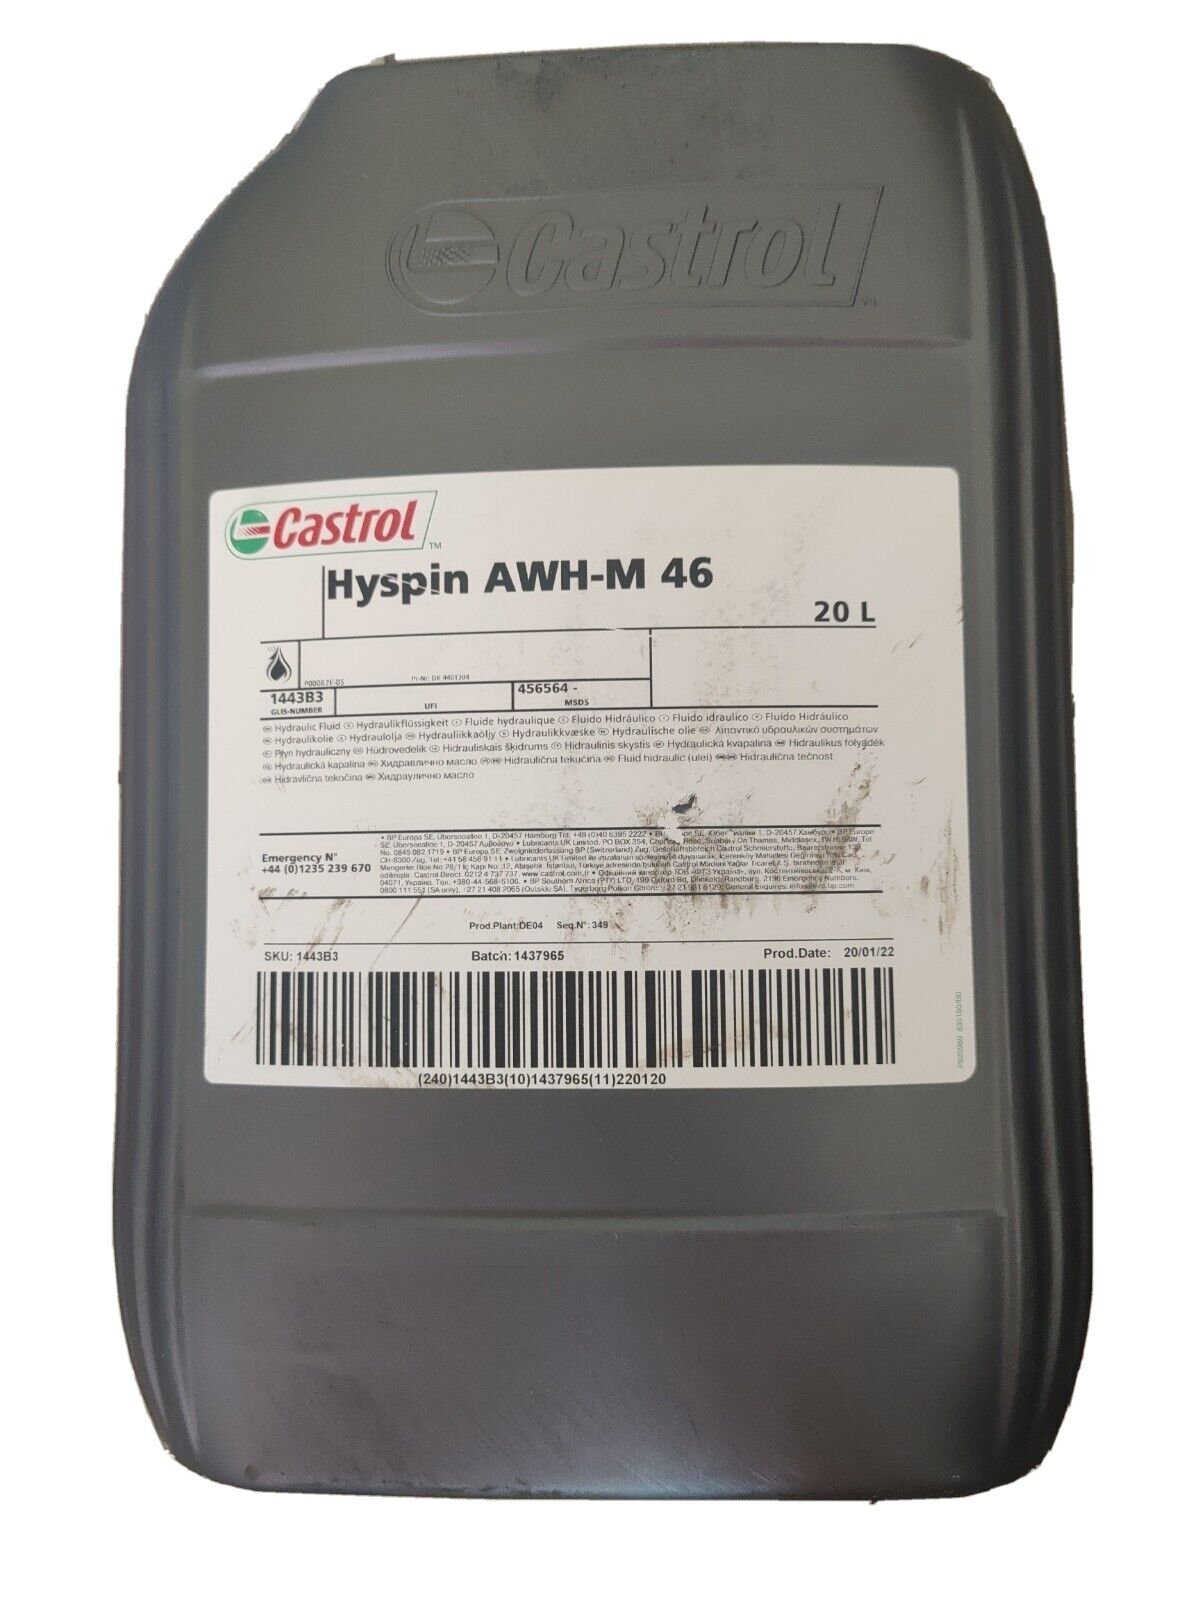 Castrol Hyspin AWH-M 46 Mehrbereichs-Hydrauliköl 20l Kanister 1443B3 HL VG HLP - Flex-Autoteile